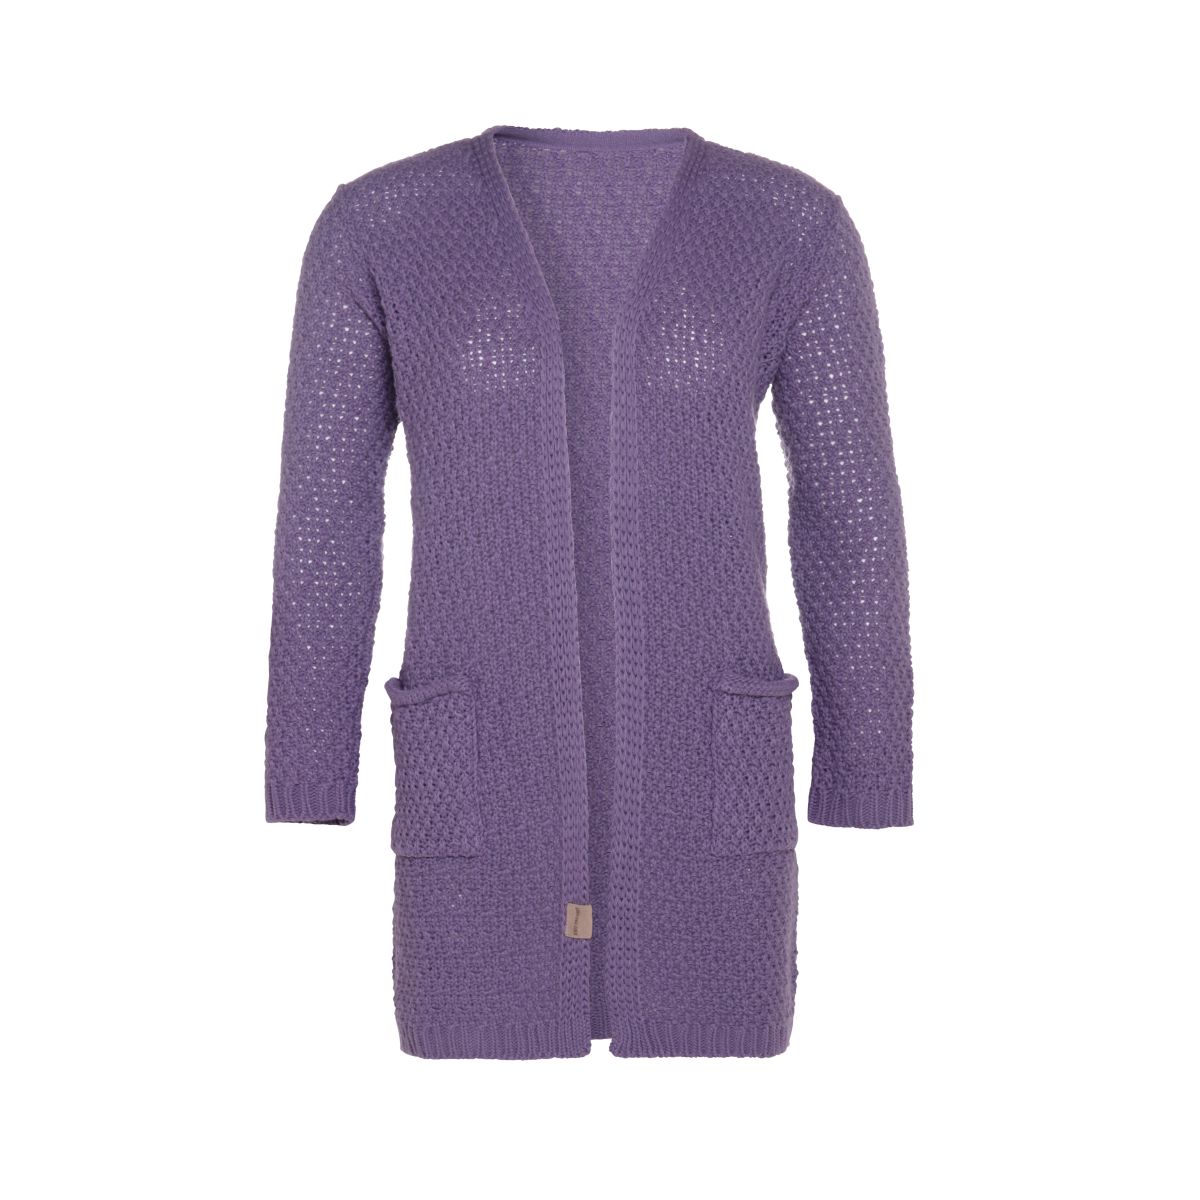 luna knitted cardigan violet 4042 with side pockets